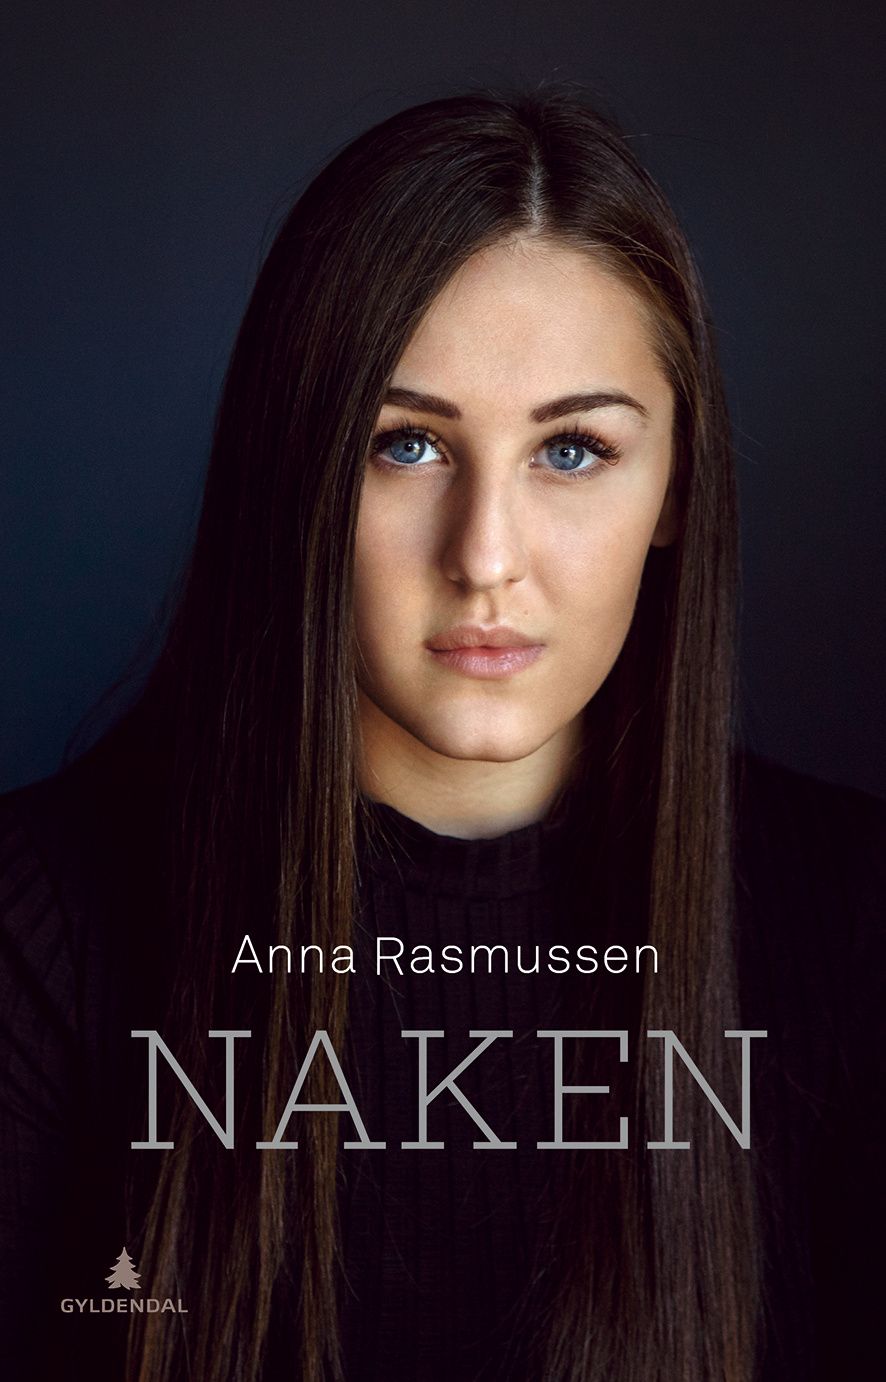 Anna Naken